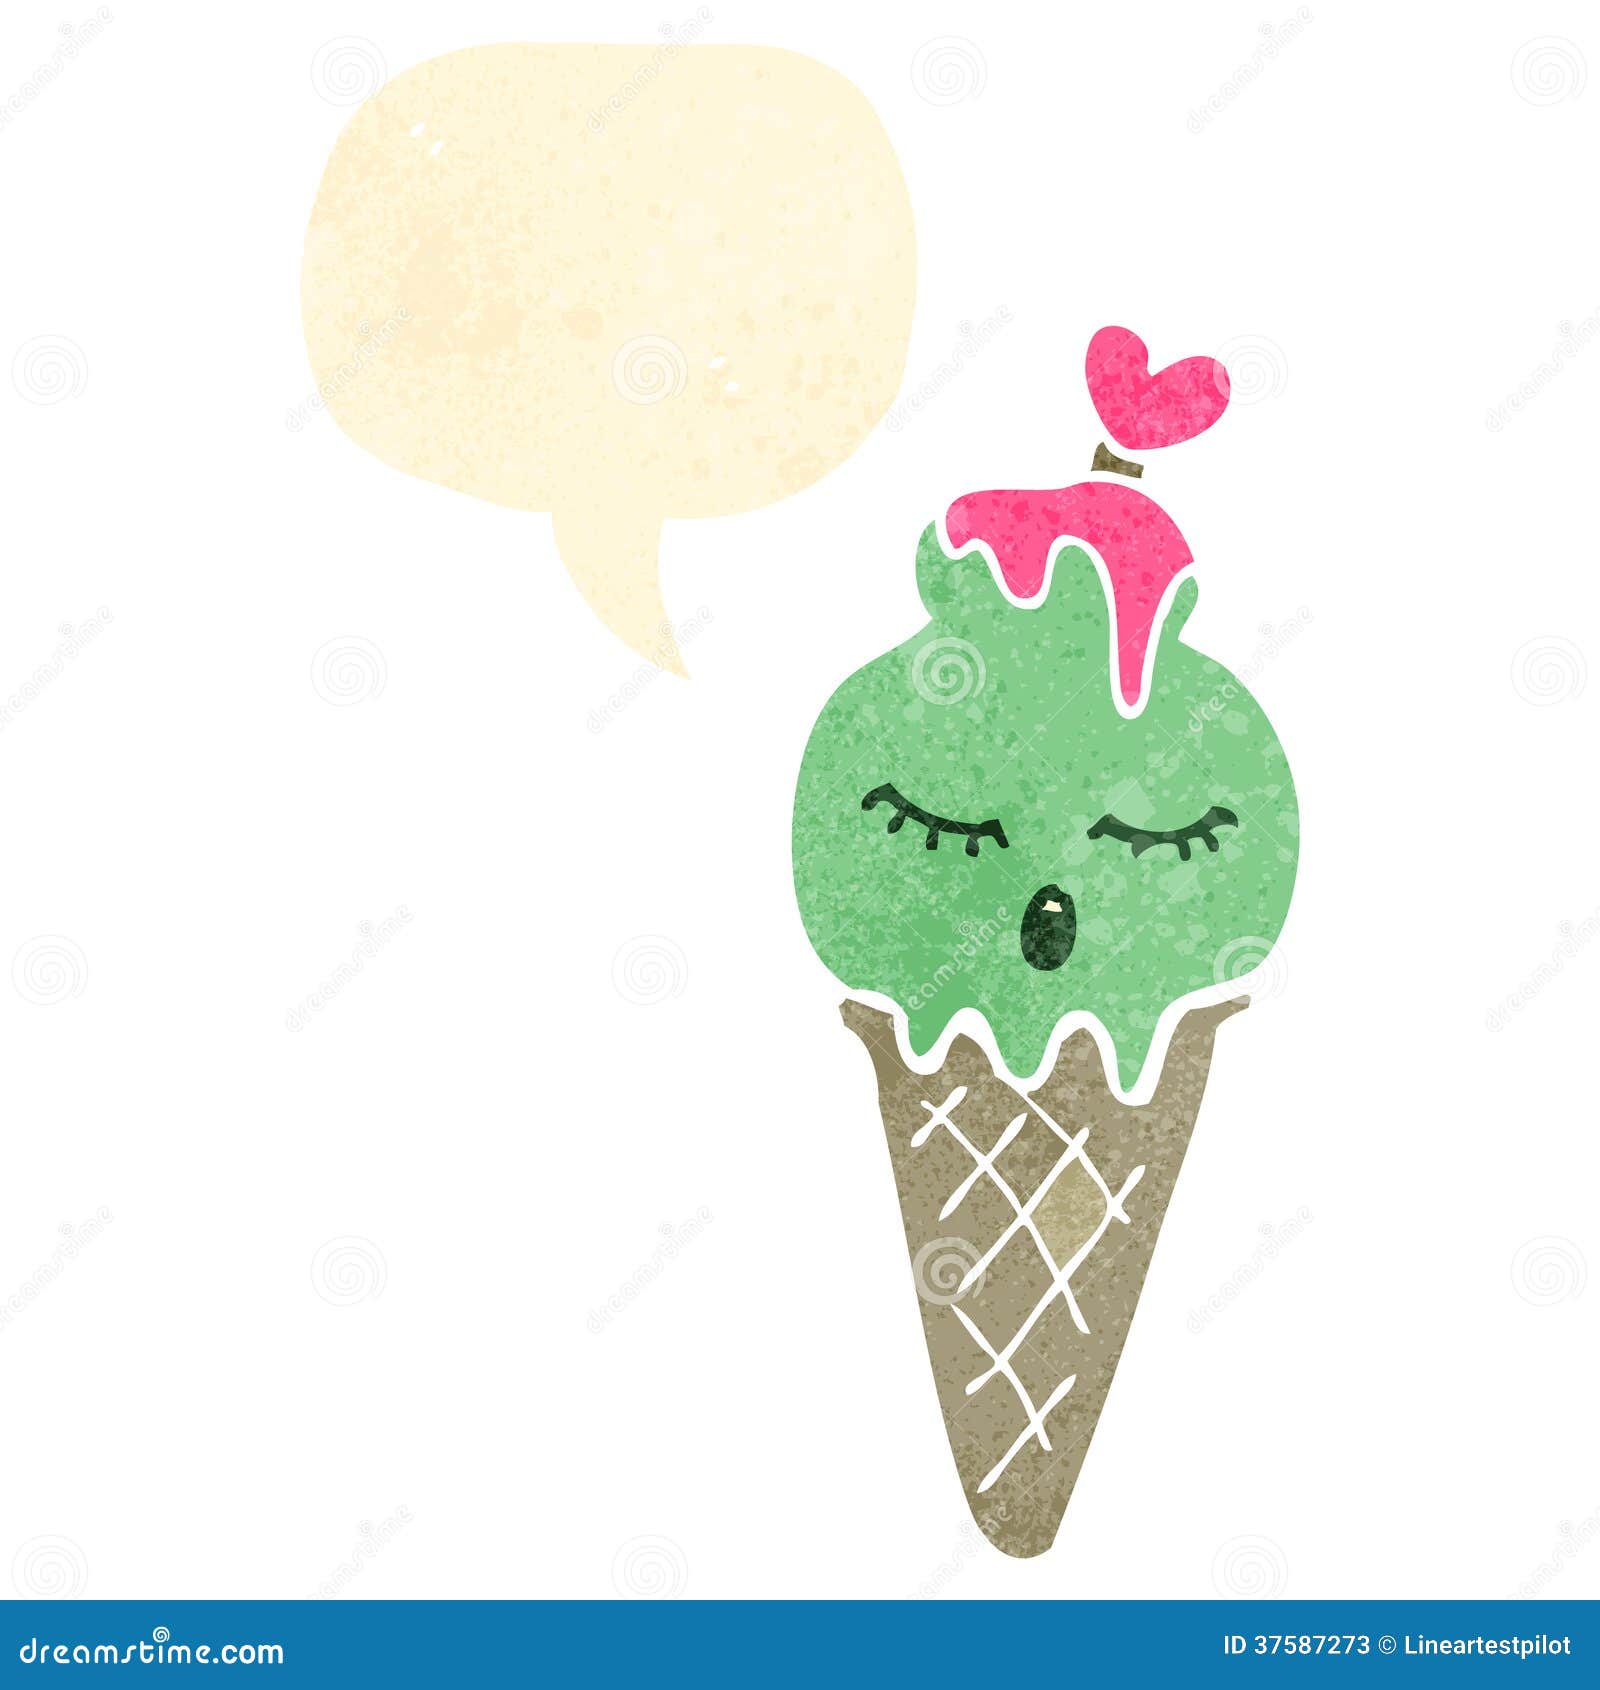 retro cartoon ice cream cone character with speech bubble. Retro cartoon with texture. Isolated on White.